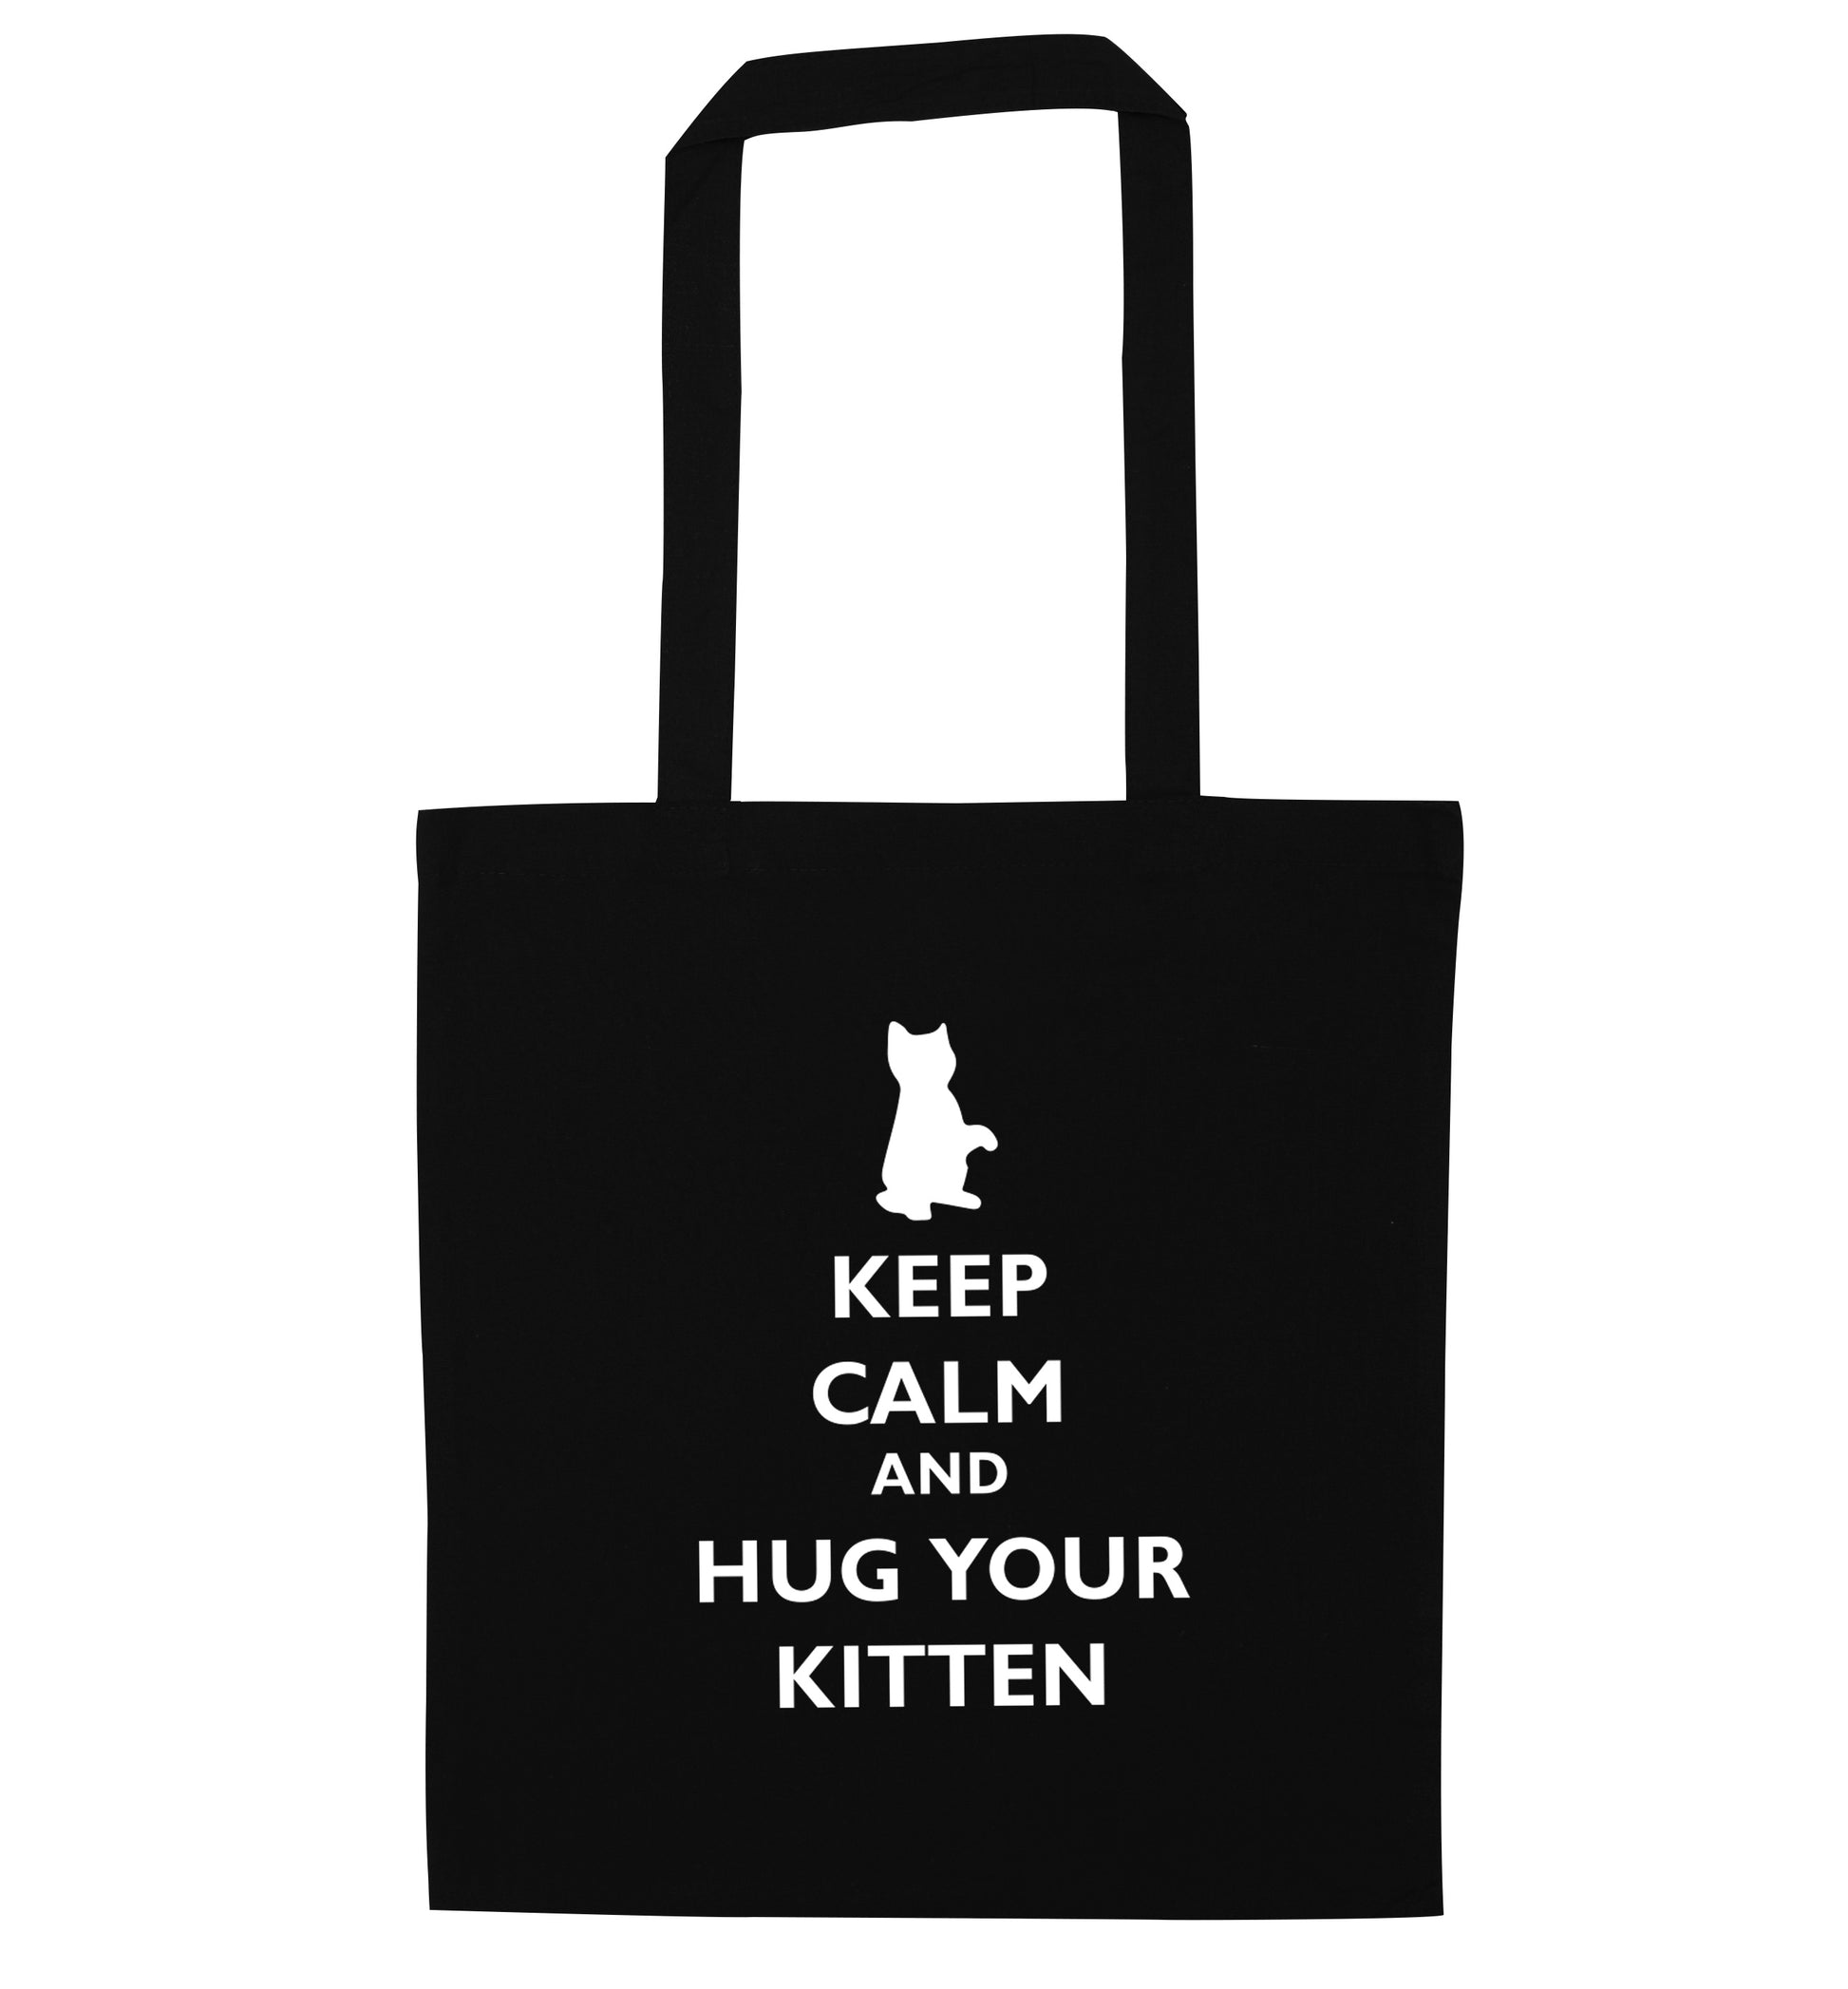 Keep calm and hug your kitten black tote bag